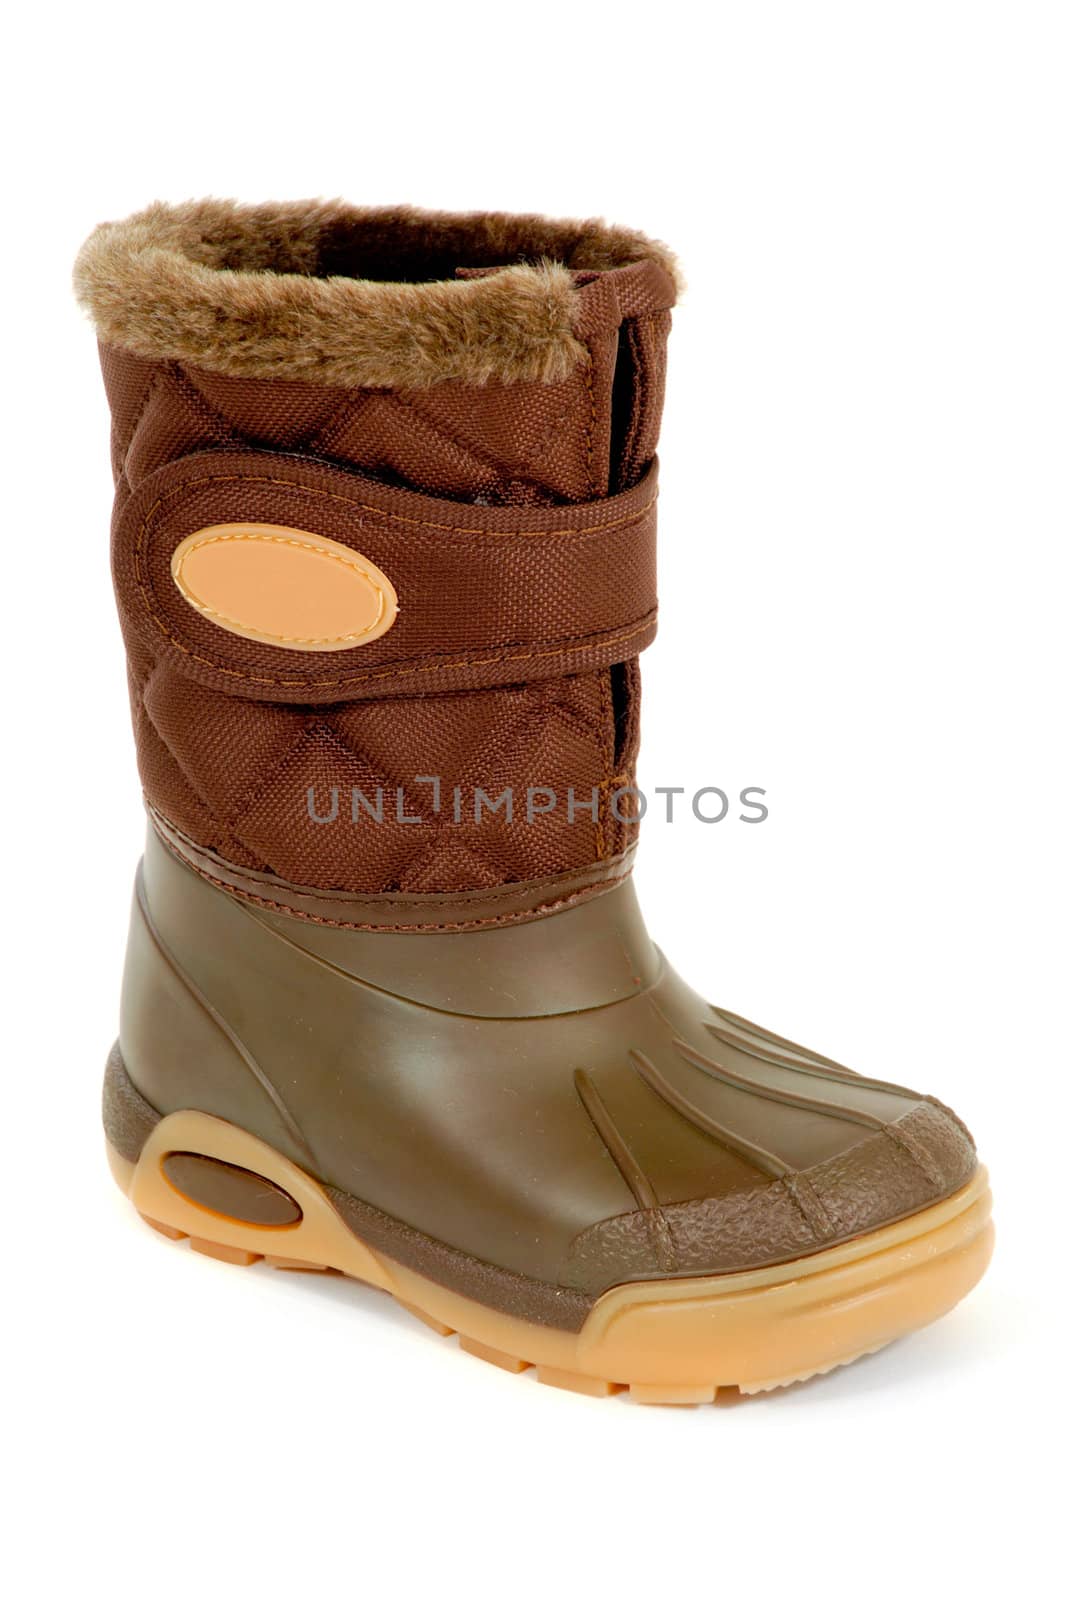 Winter boot by cfoto